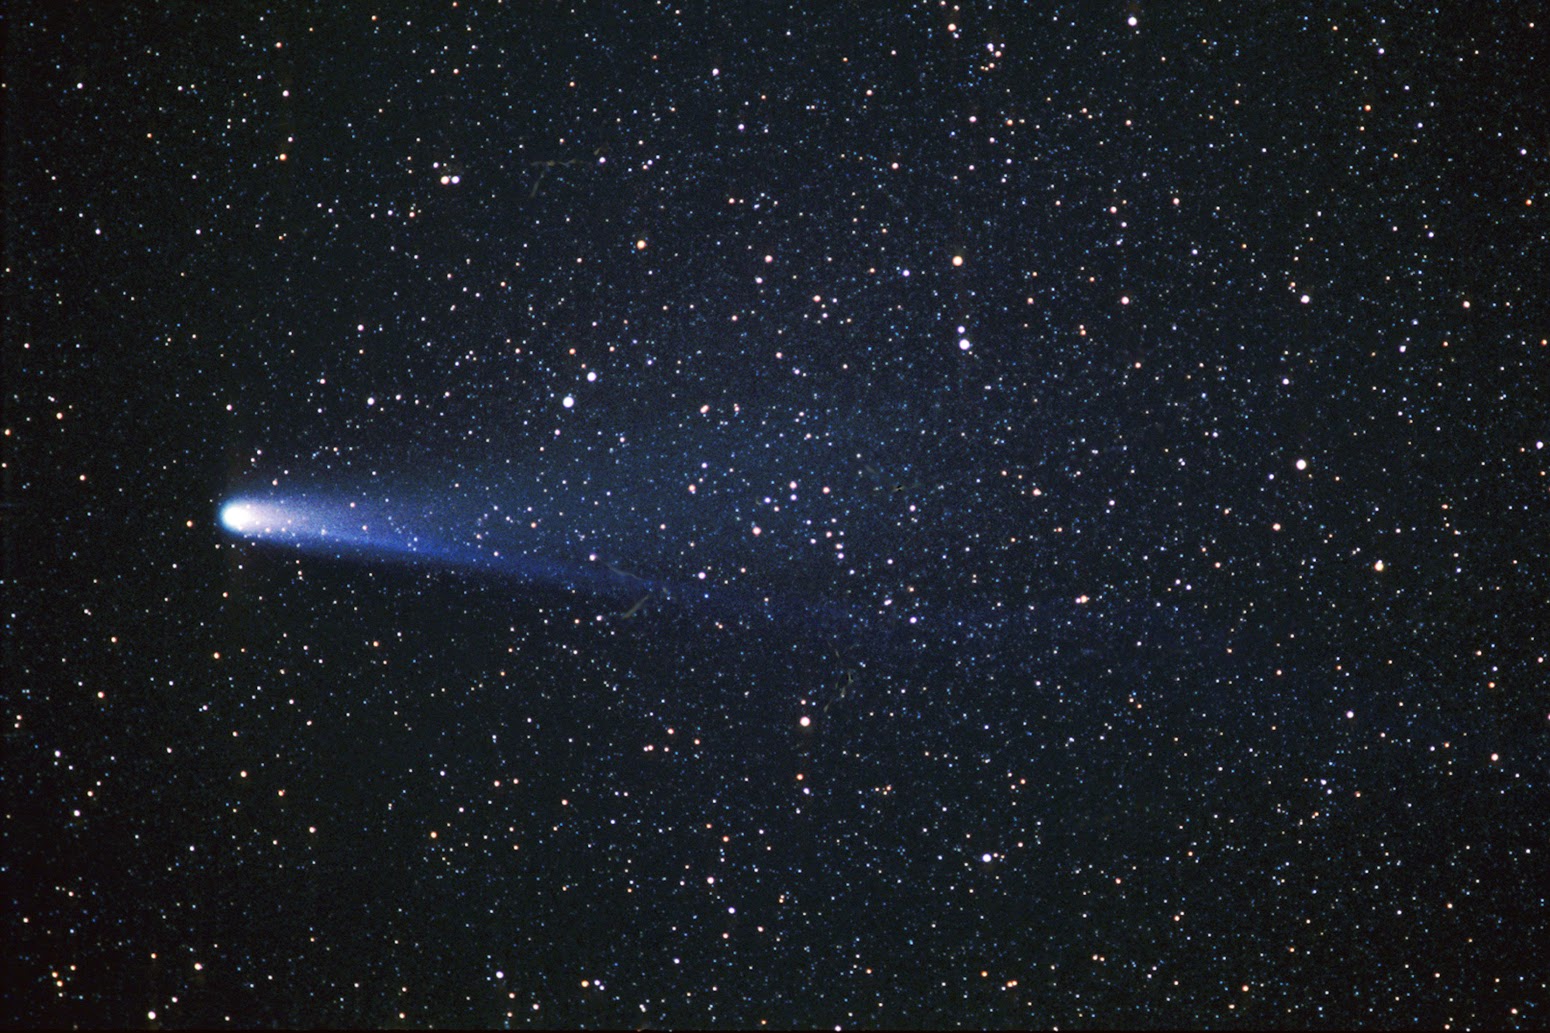 APOD: December 10, 1996 - Comet Halleys Nucleus